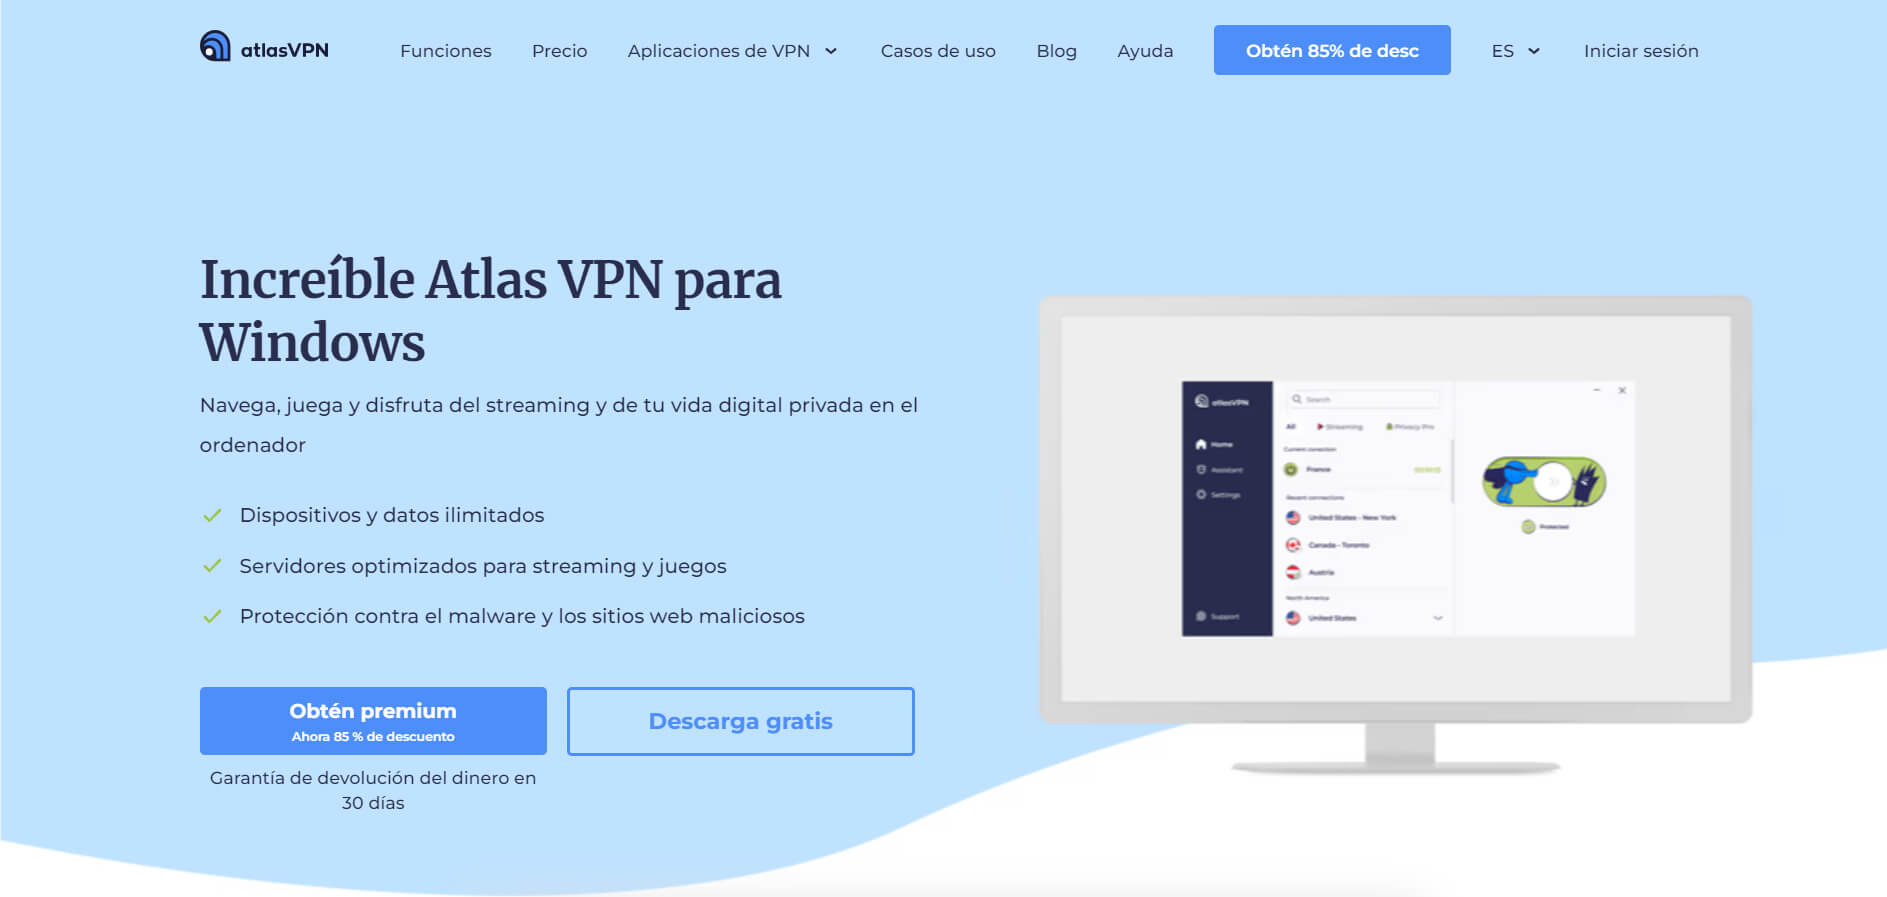 Atlas VPN para Windows